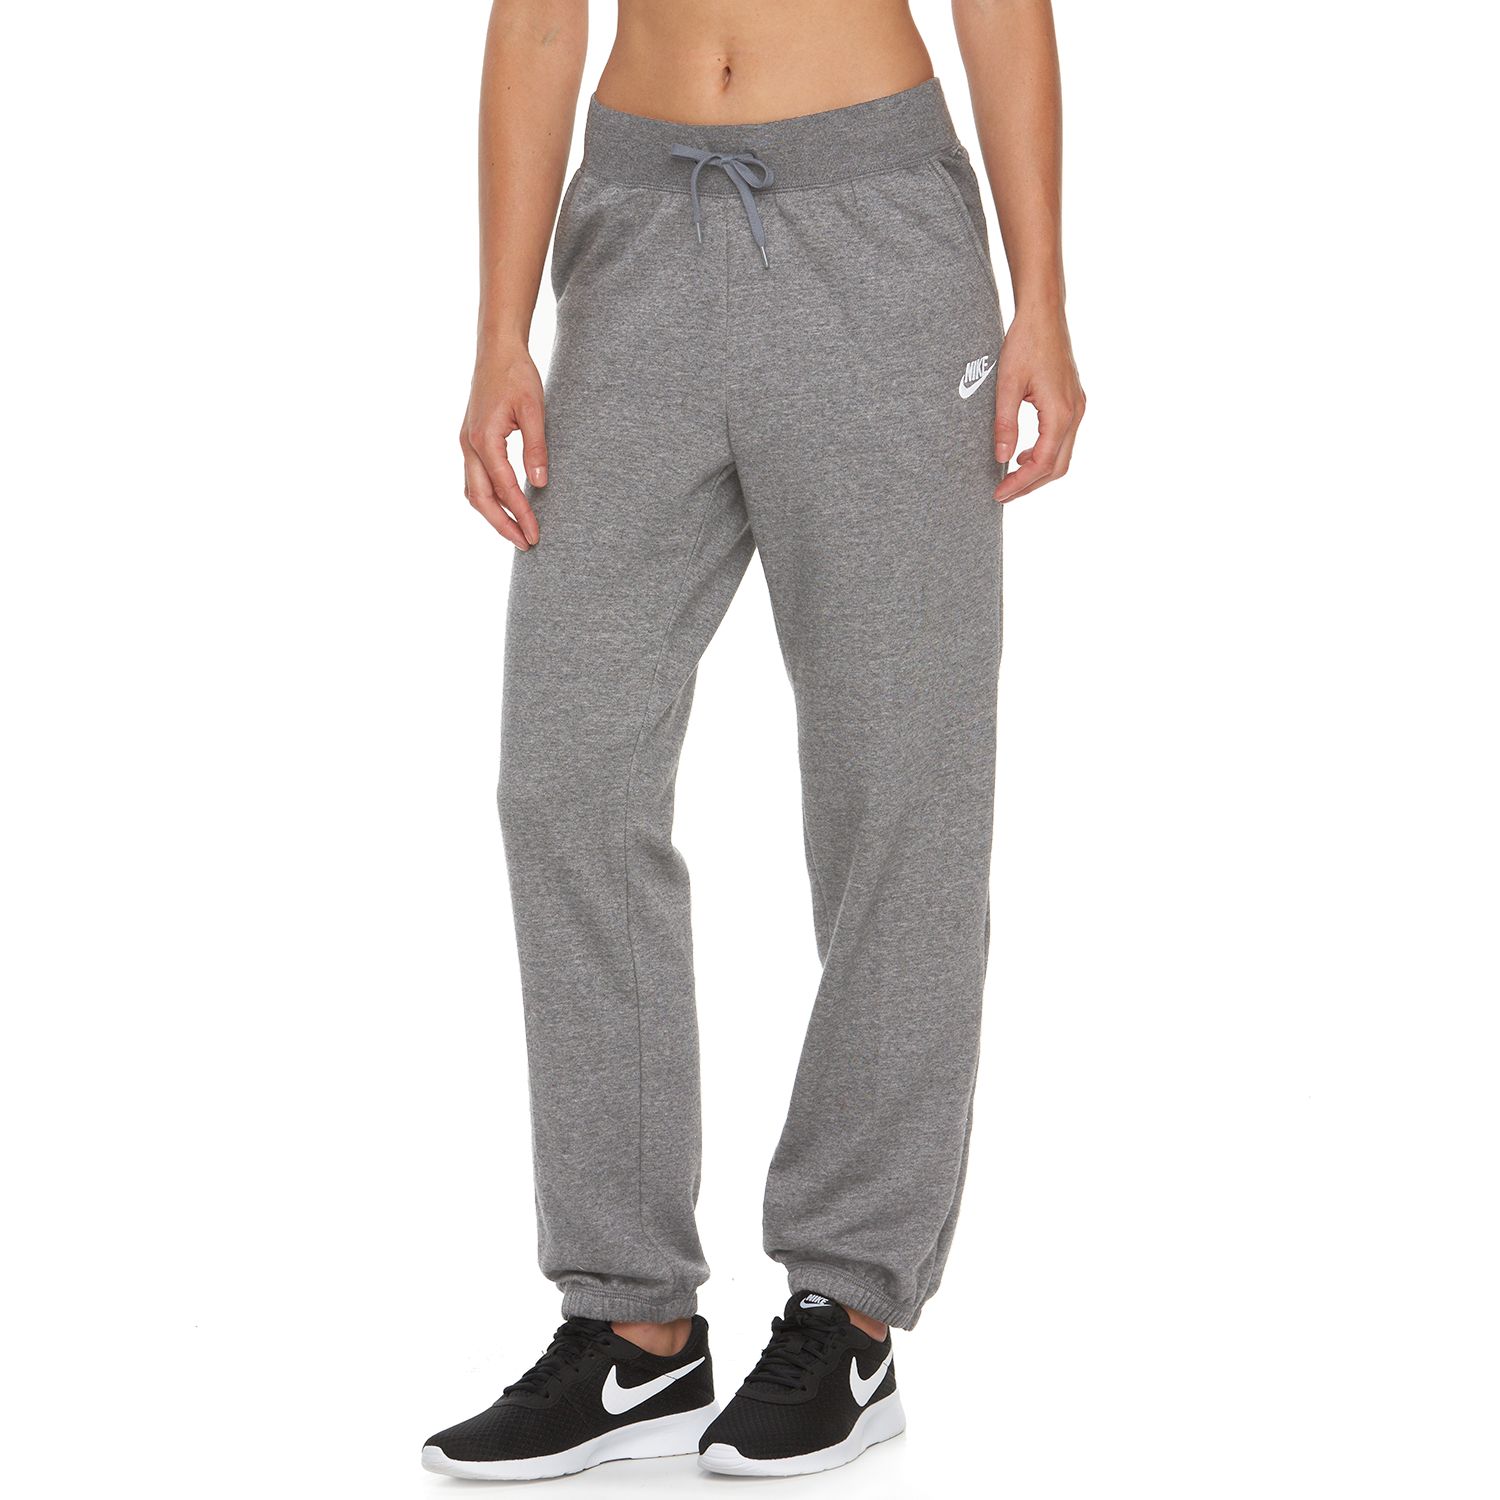 nike gray women's sweatpants